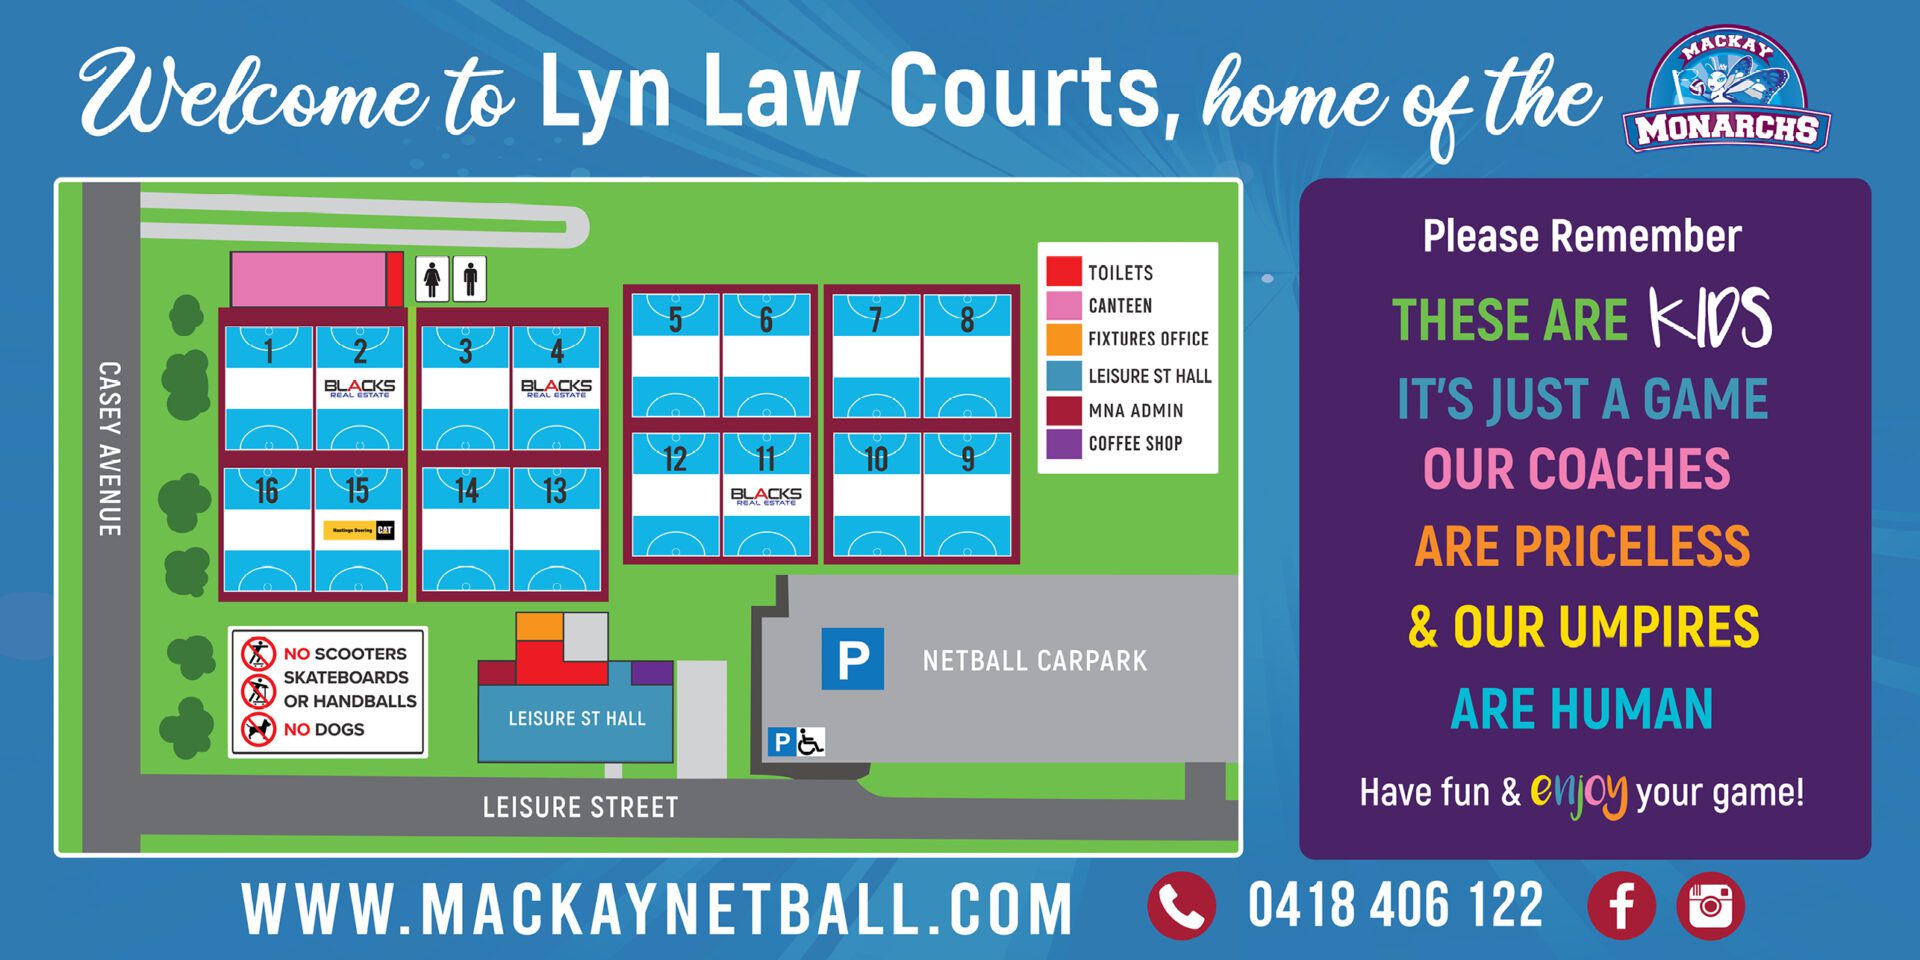 Mackay Netball Lyn Law Courts